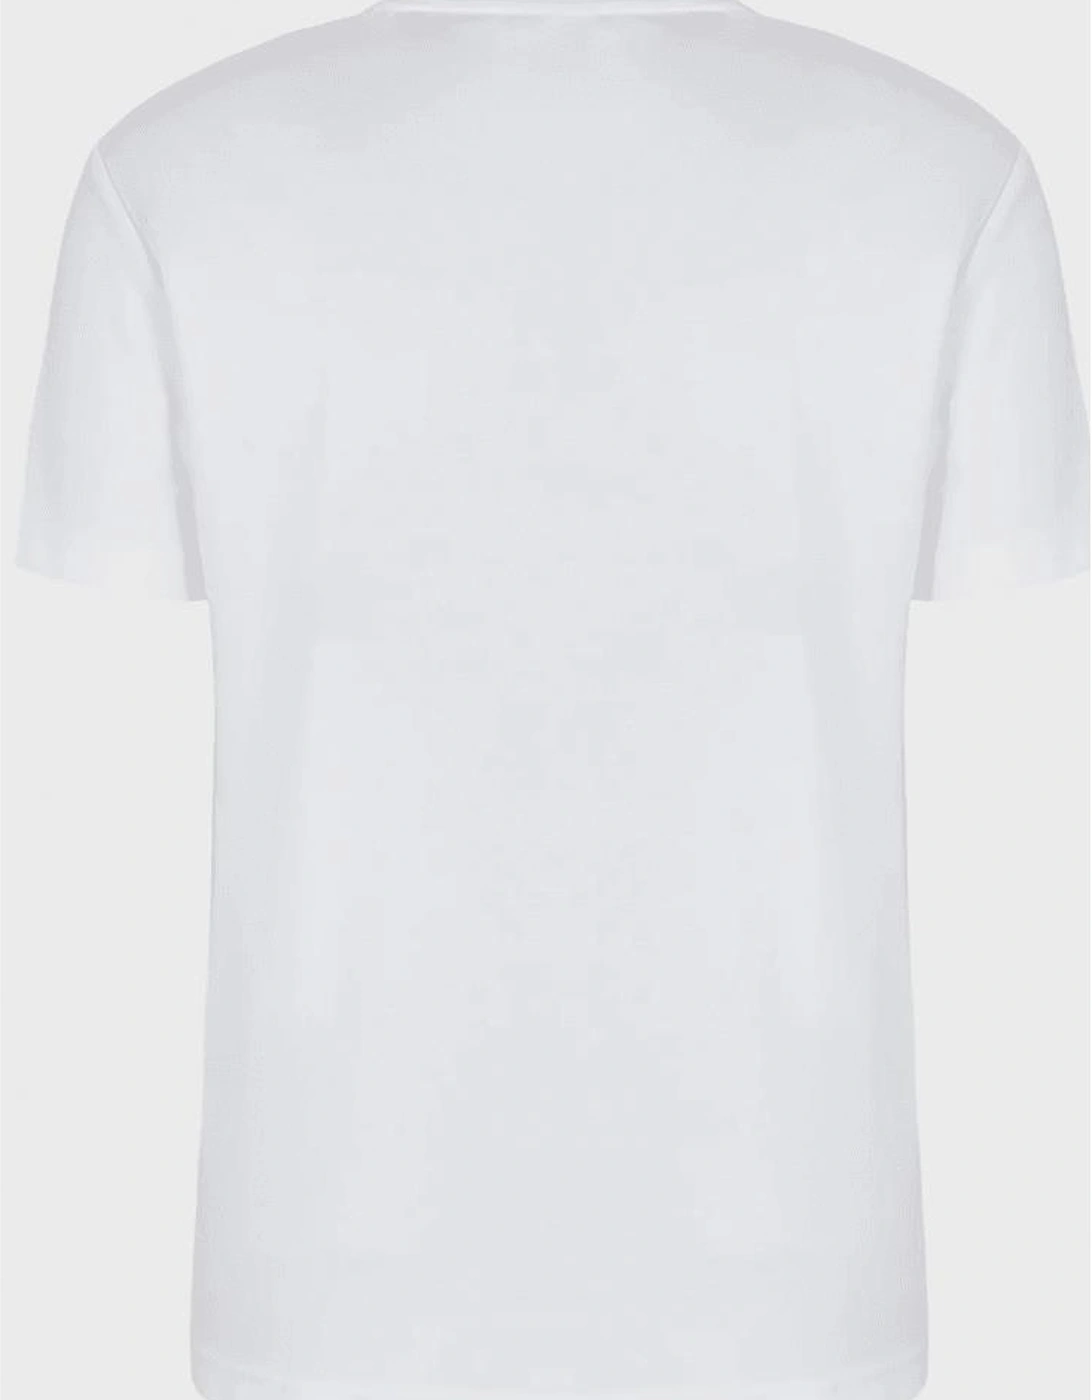 Basic Crest Logo White T-Shirt